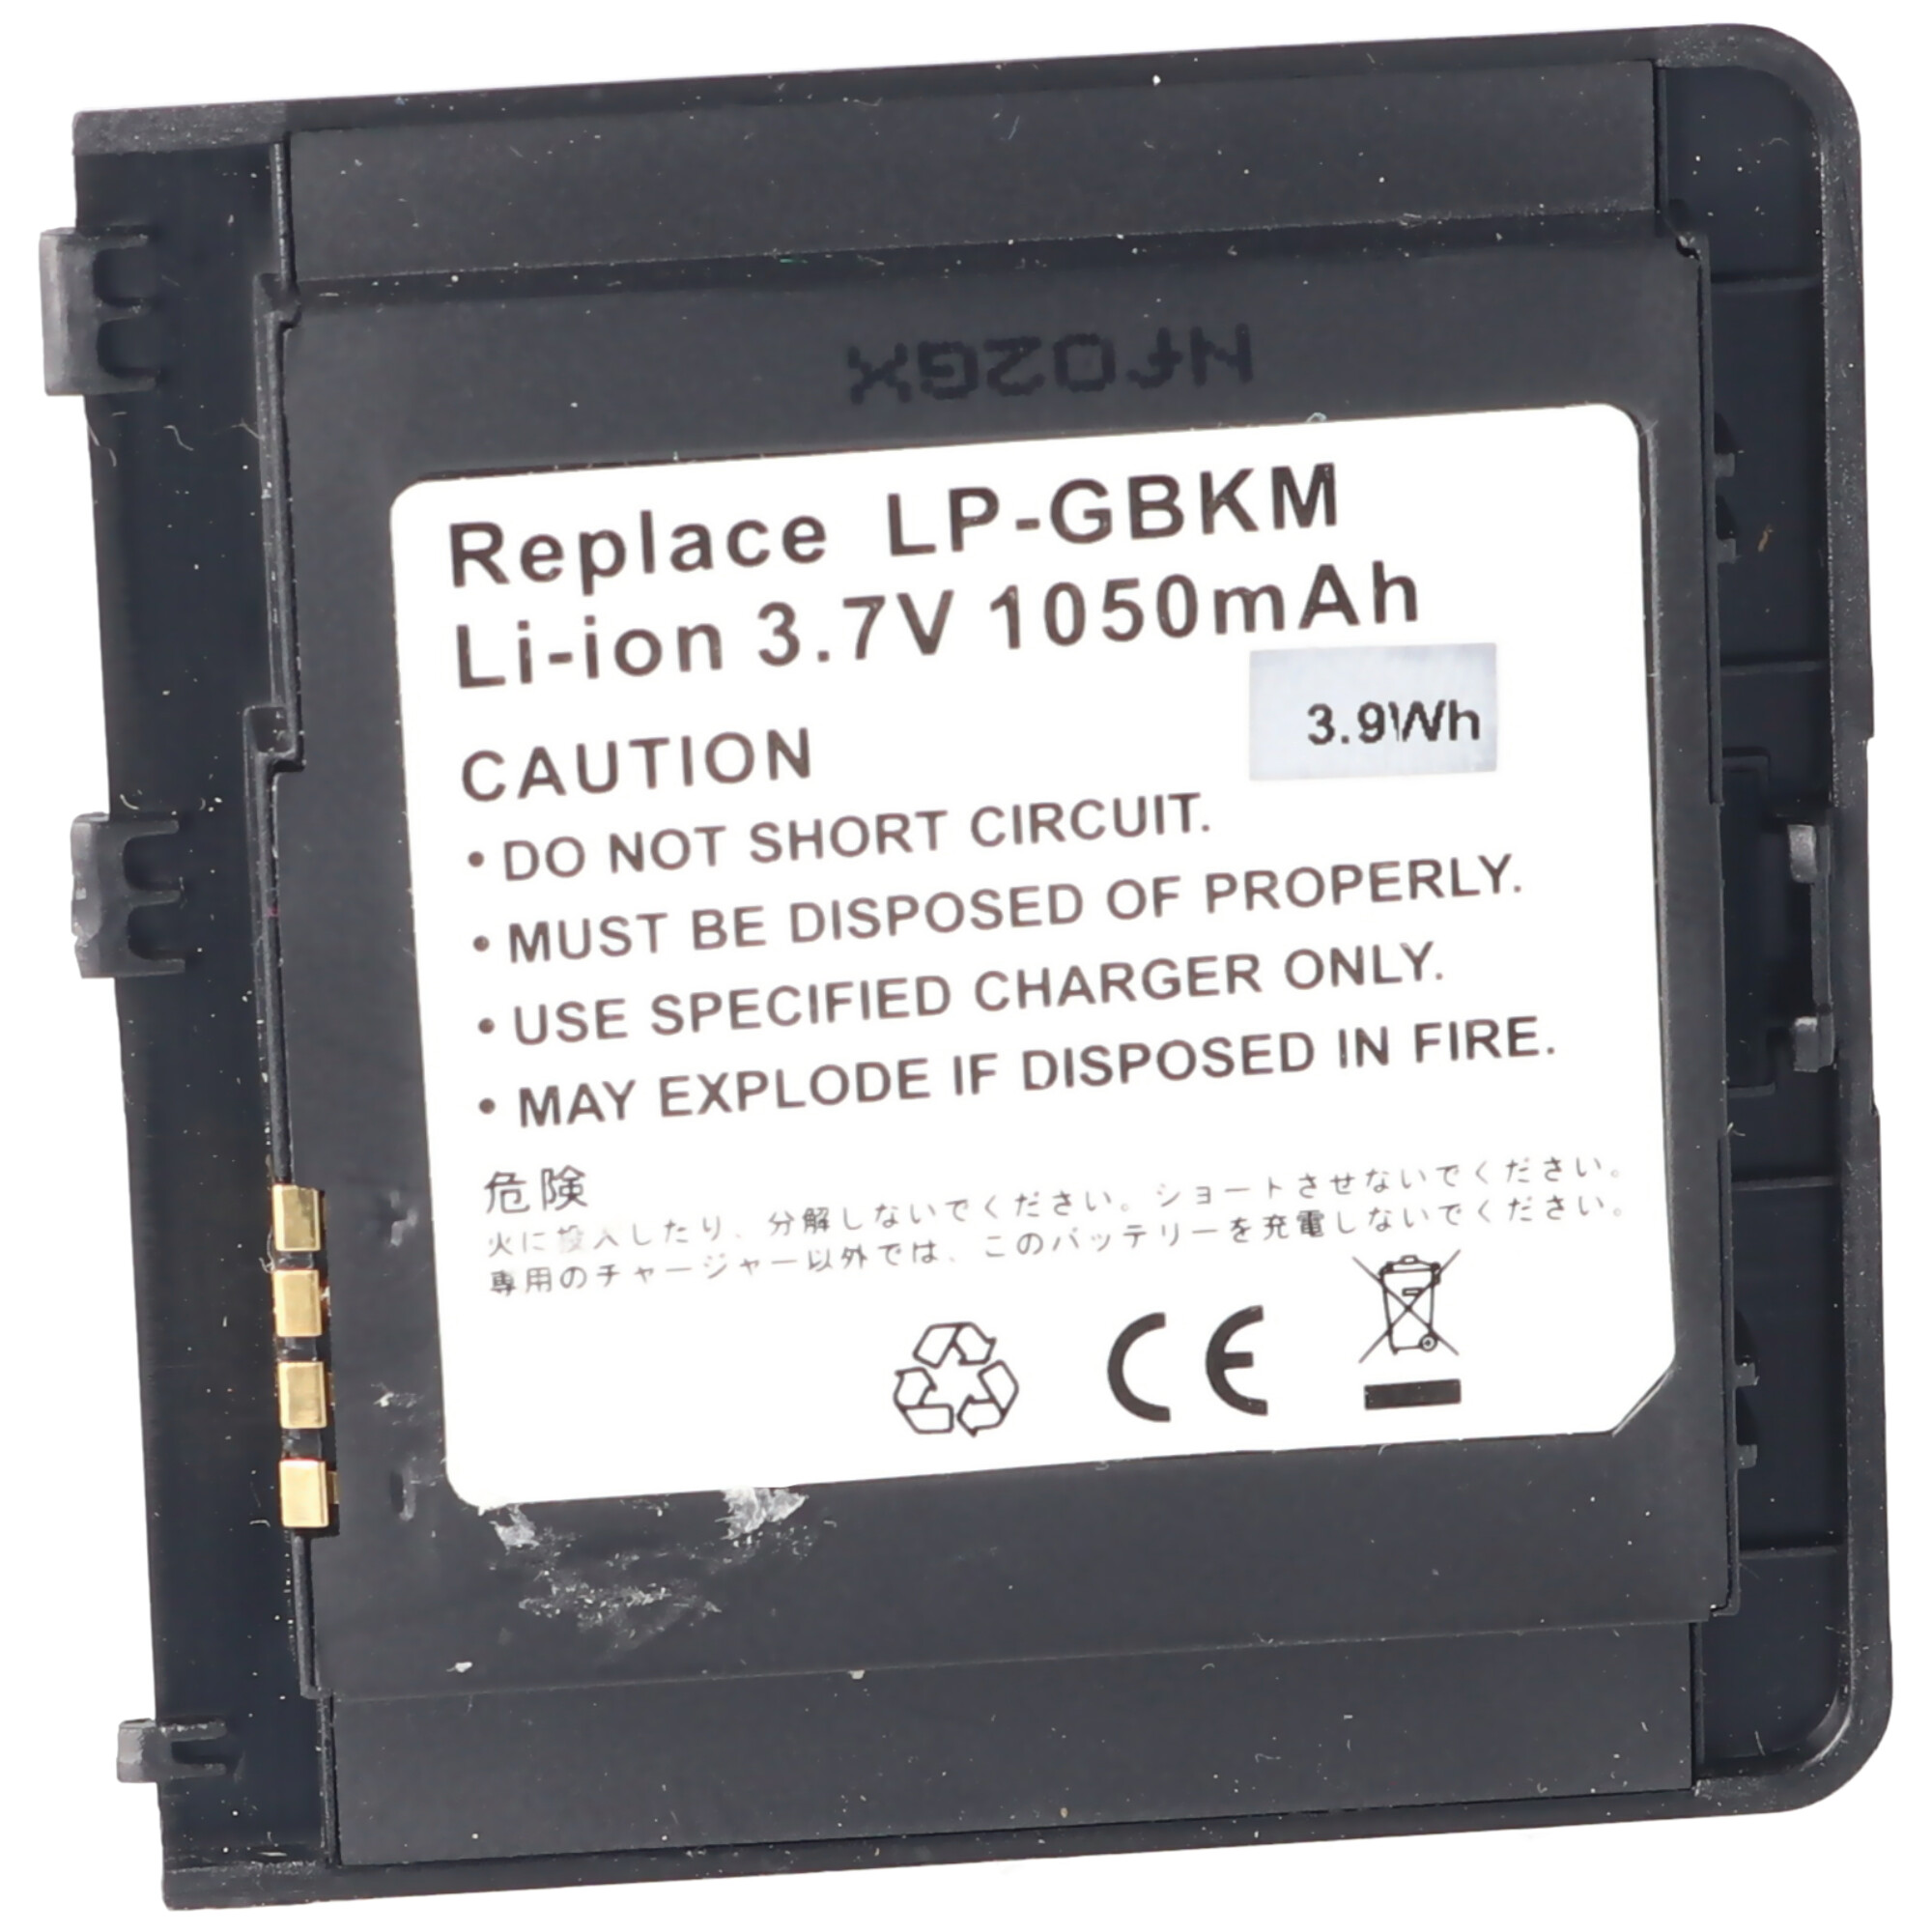 SBPP0023301 passend mAh 1050 KS20, Handy-Akku, Akku - ACCUCELL LGLP-GBKM, LG Lithium-Ionen für Li-Ion